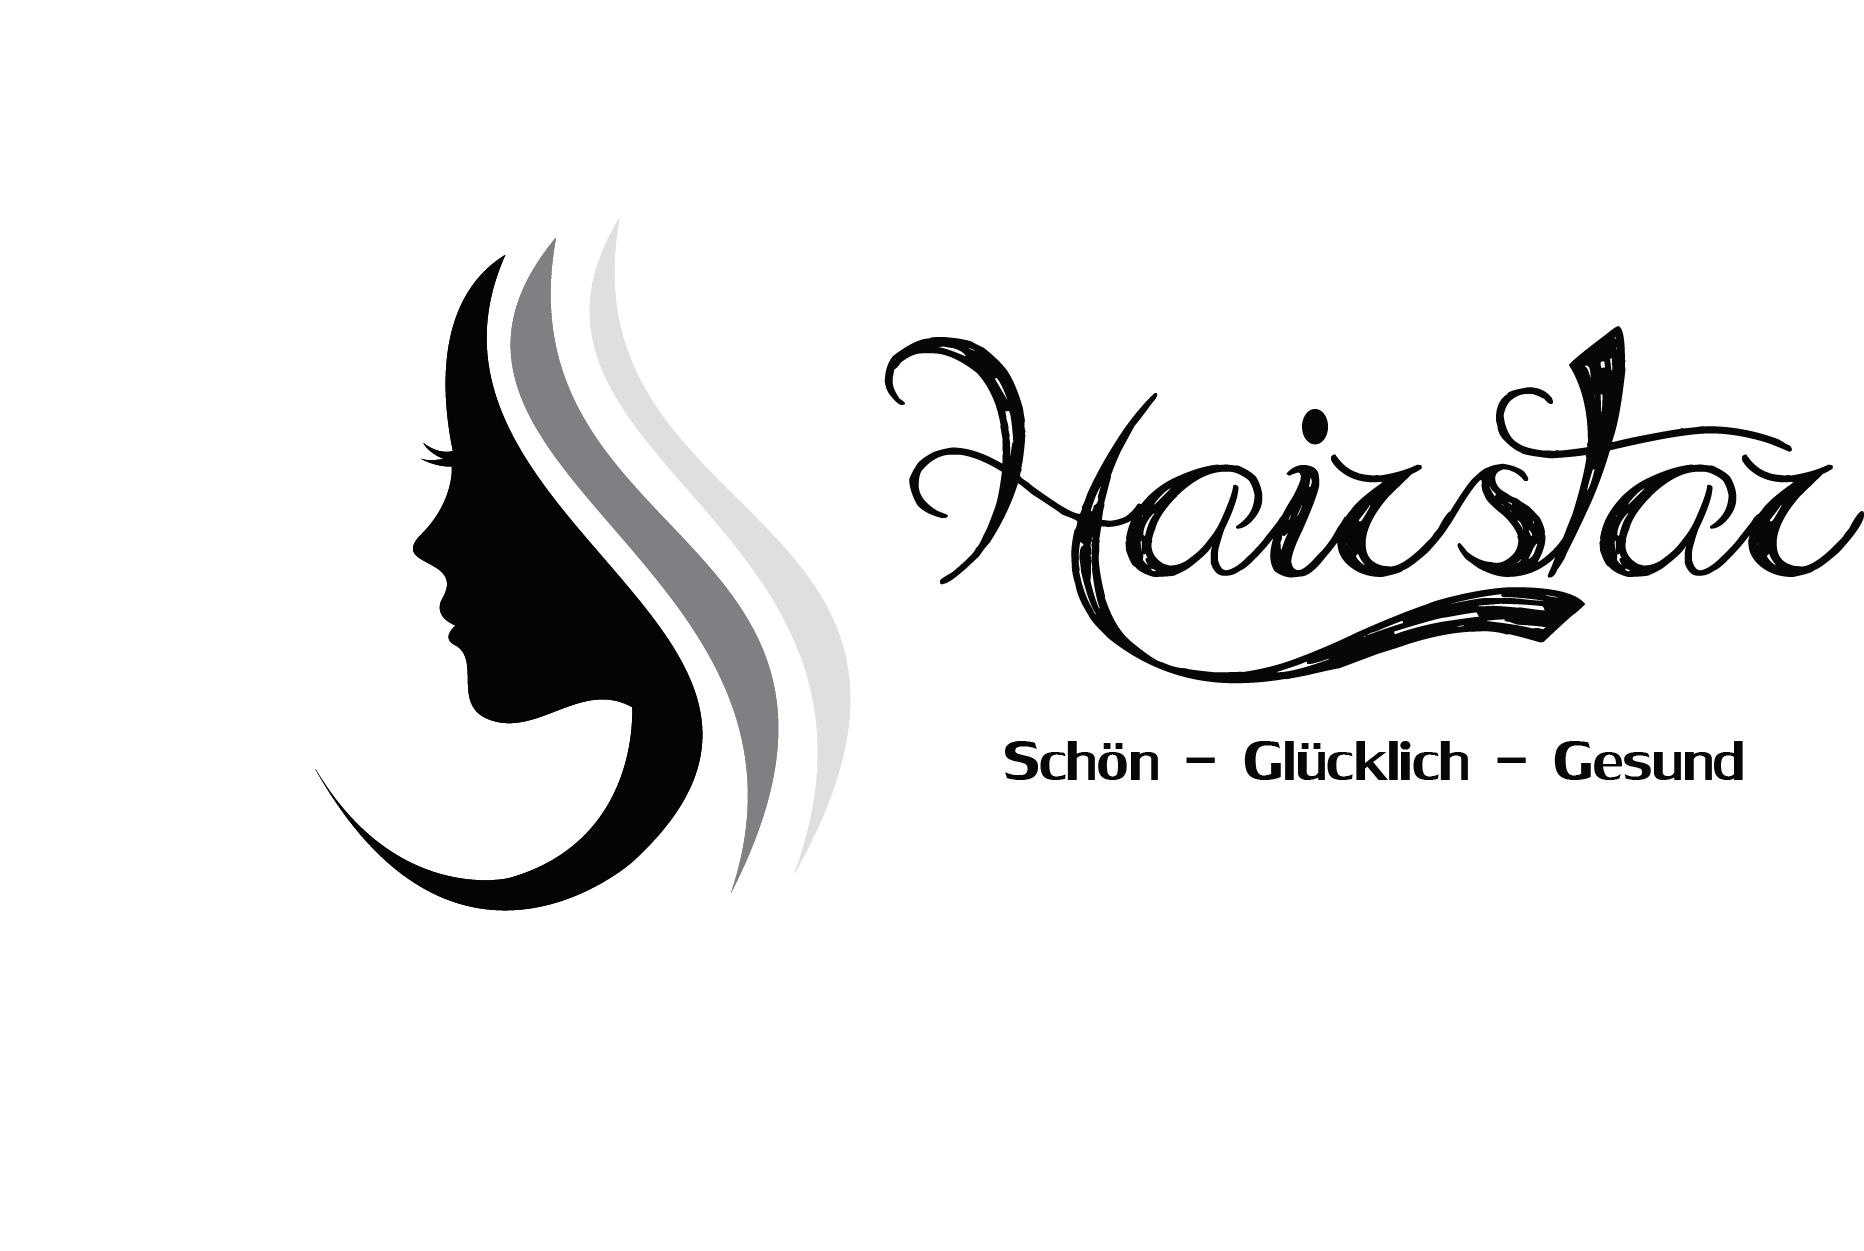 Hair salon Logos